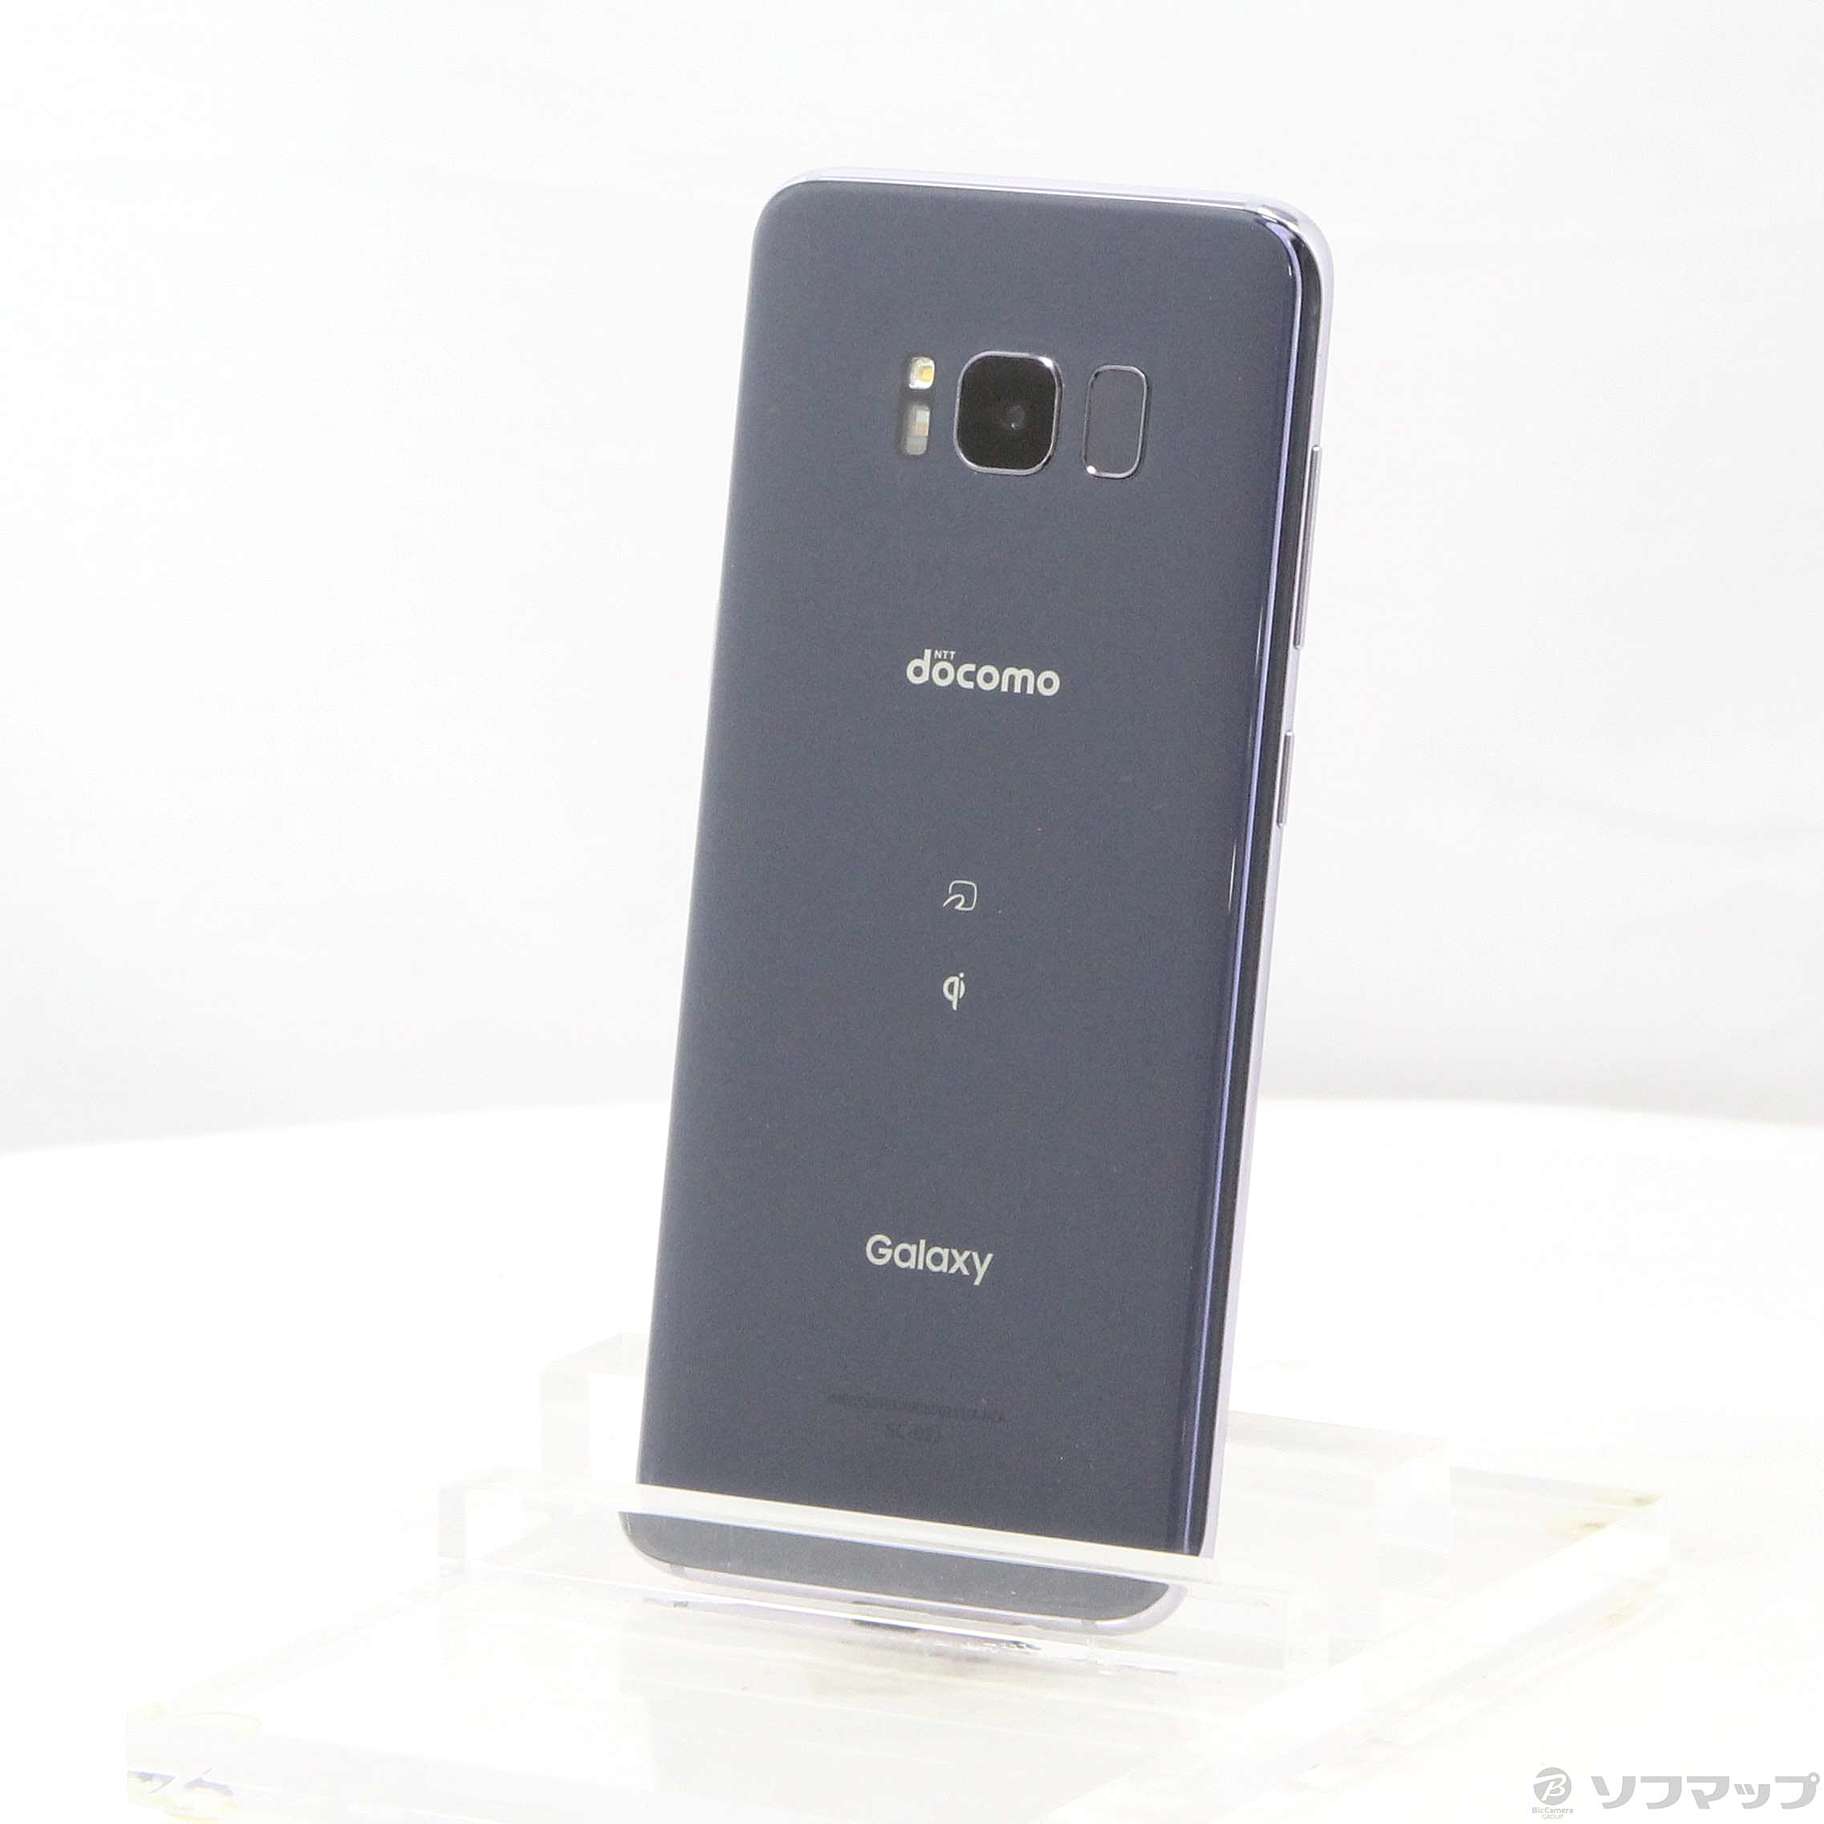 Galaxy S8 Gray 64GB docomoSC-02J容量 - スマートフォン本体